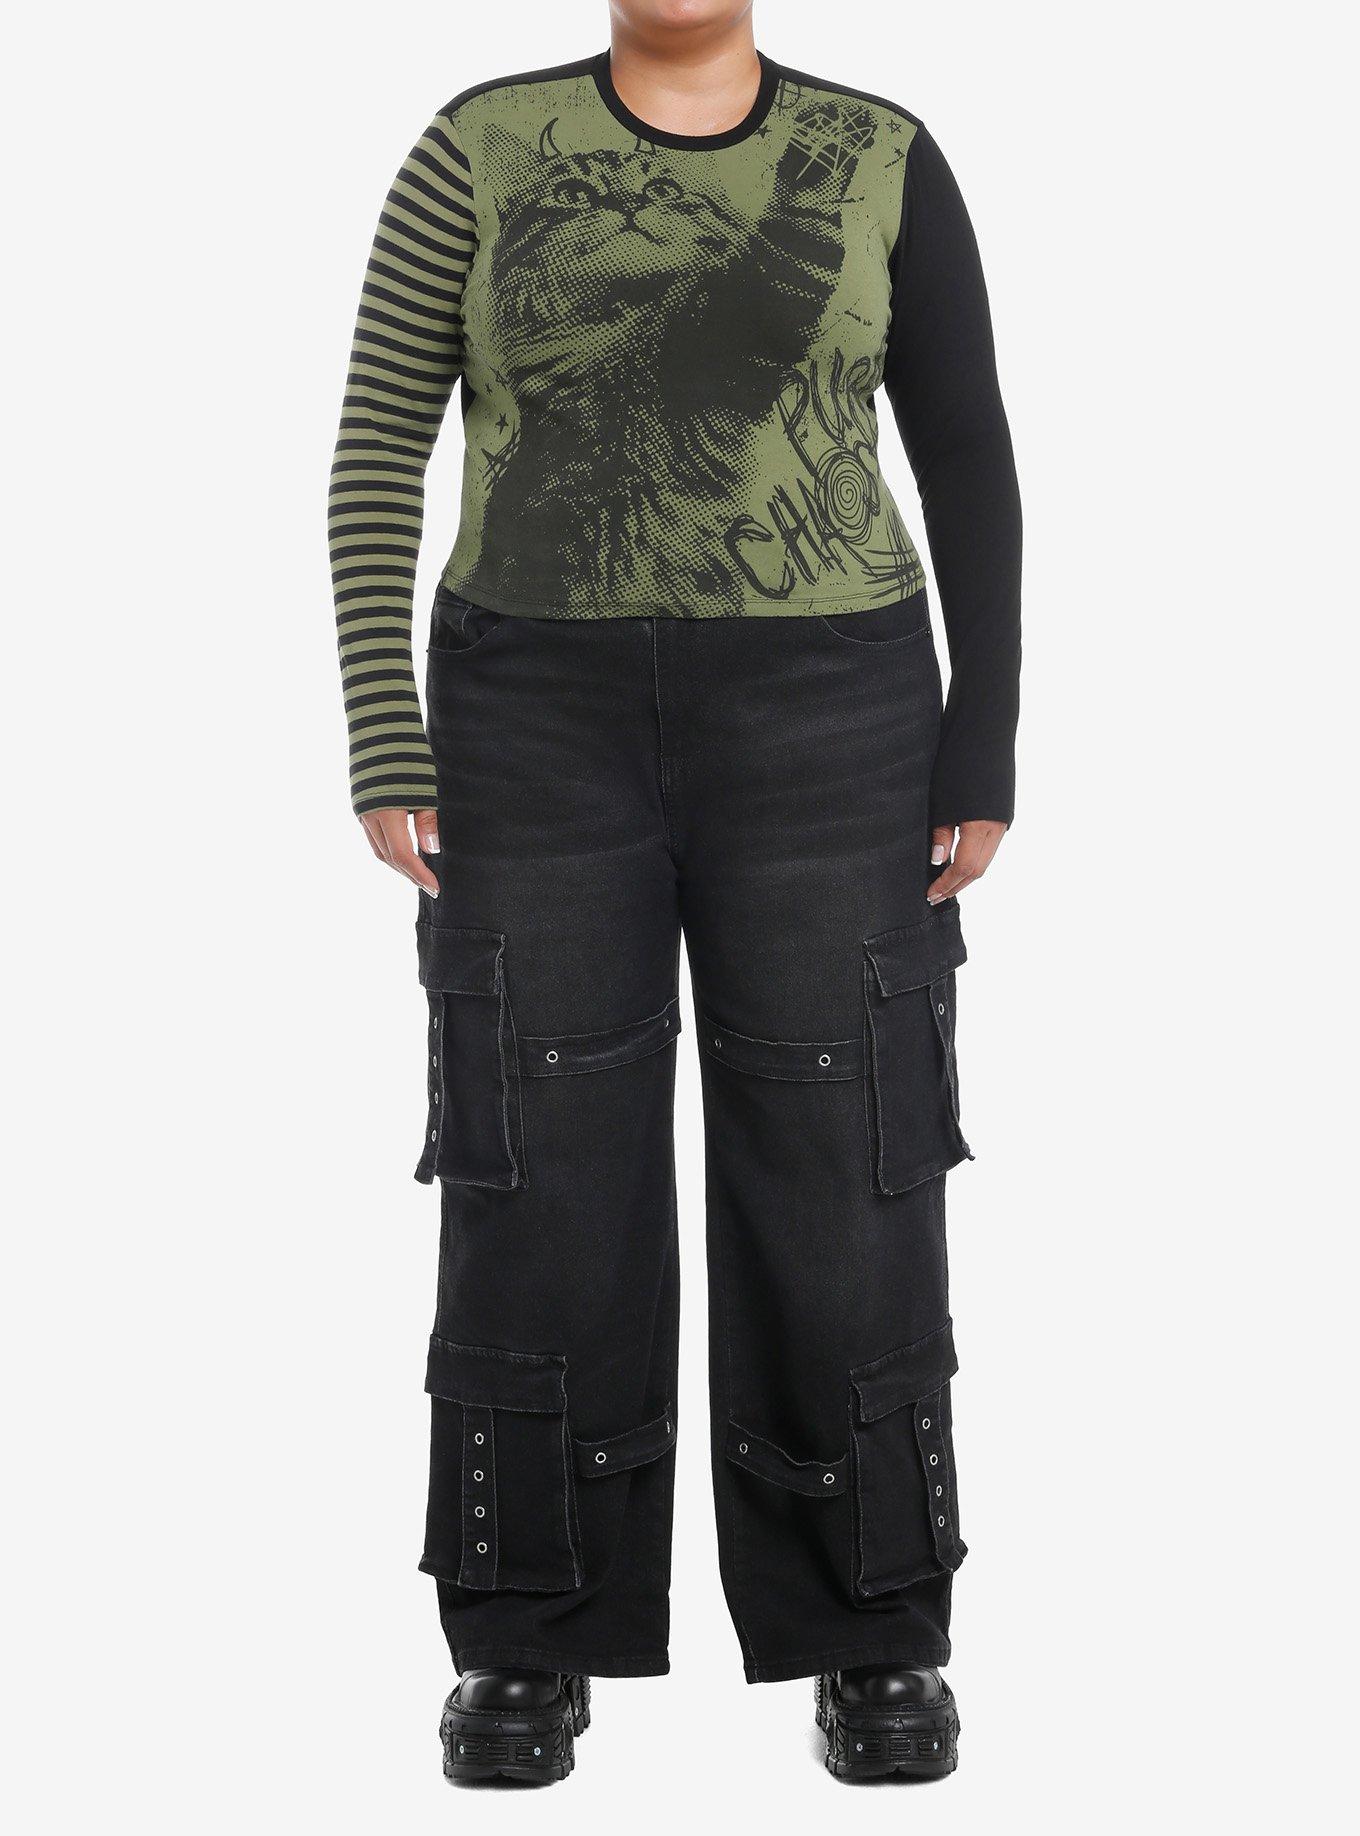 Social Collision Black & Green Grunge Cat Girls Long-Sleeve Top Plus Size, , hi-res